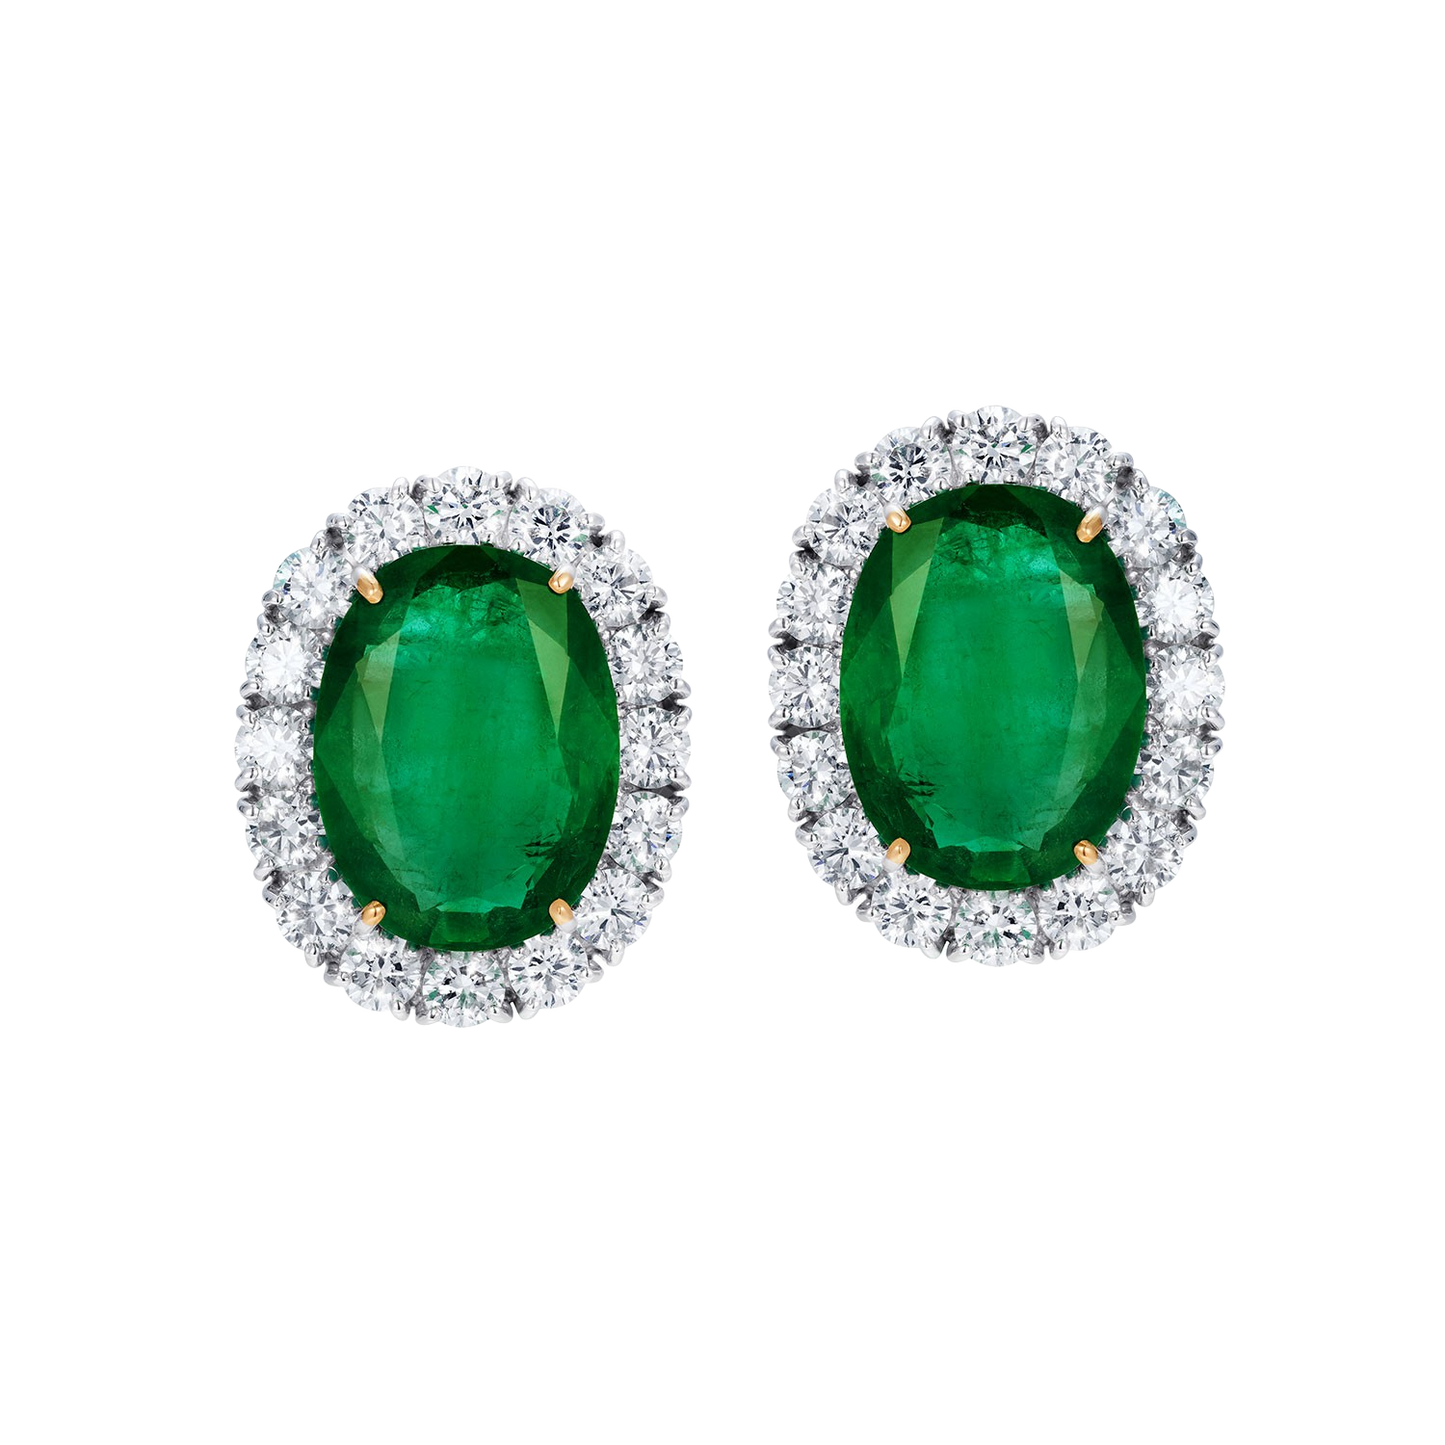 Oval Cut Emerald and Diamond Earrings